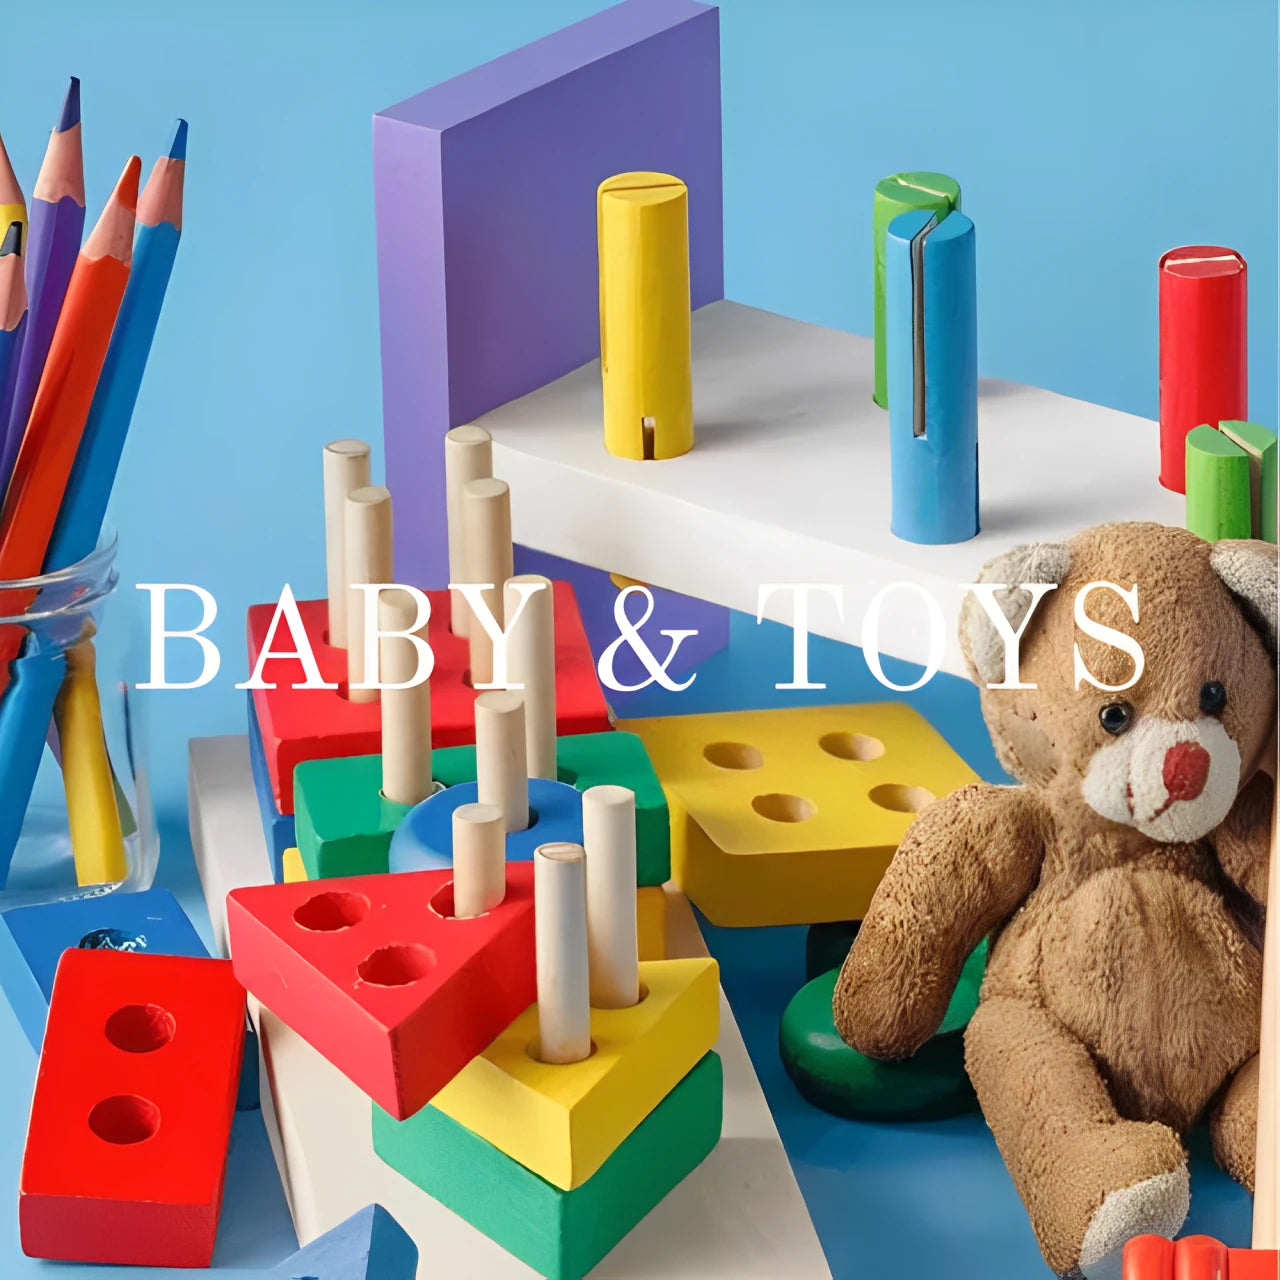 Baby & Toys